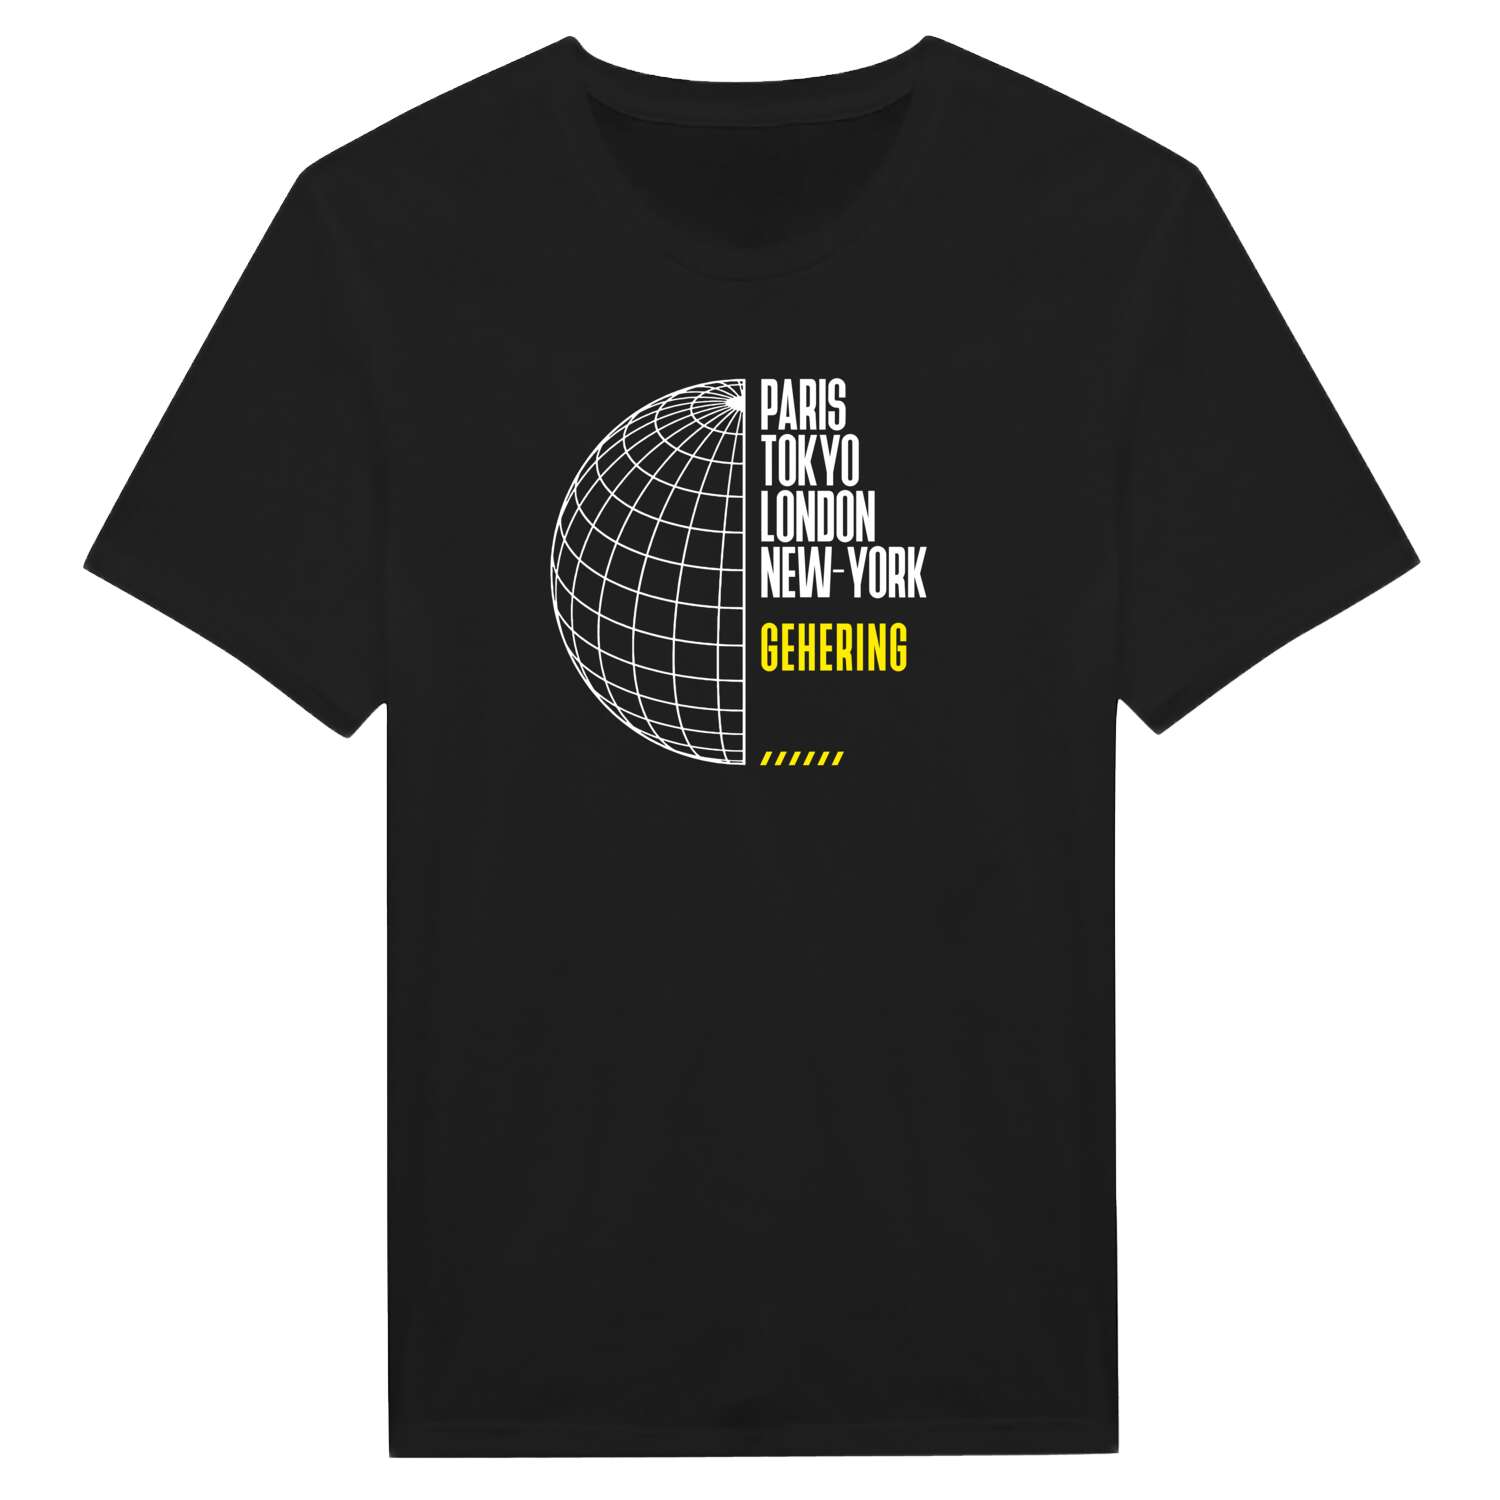 Gehering T-Shirt »Paris Tokyo London«